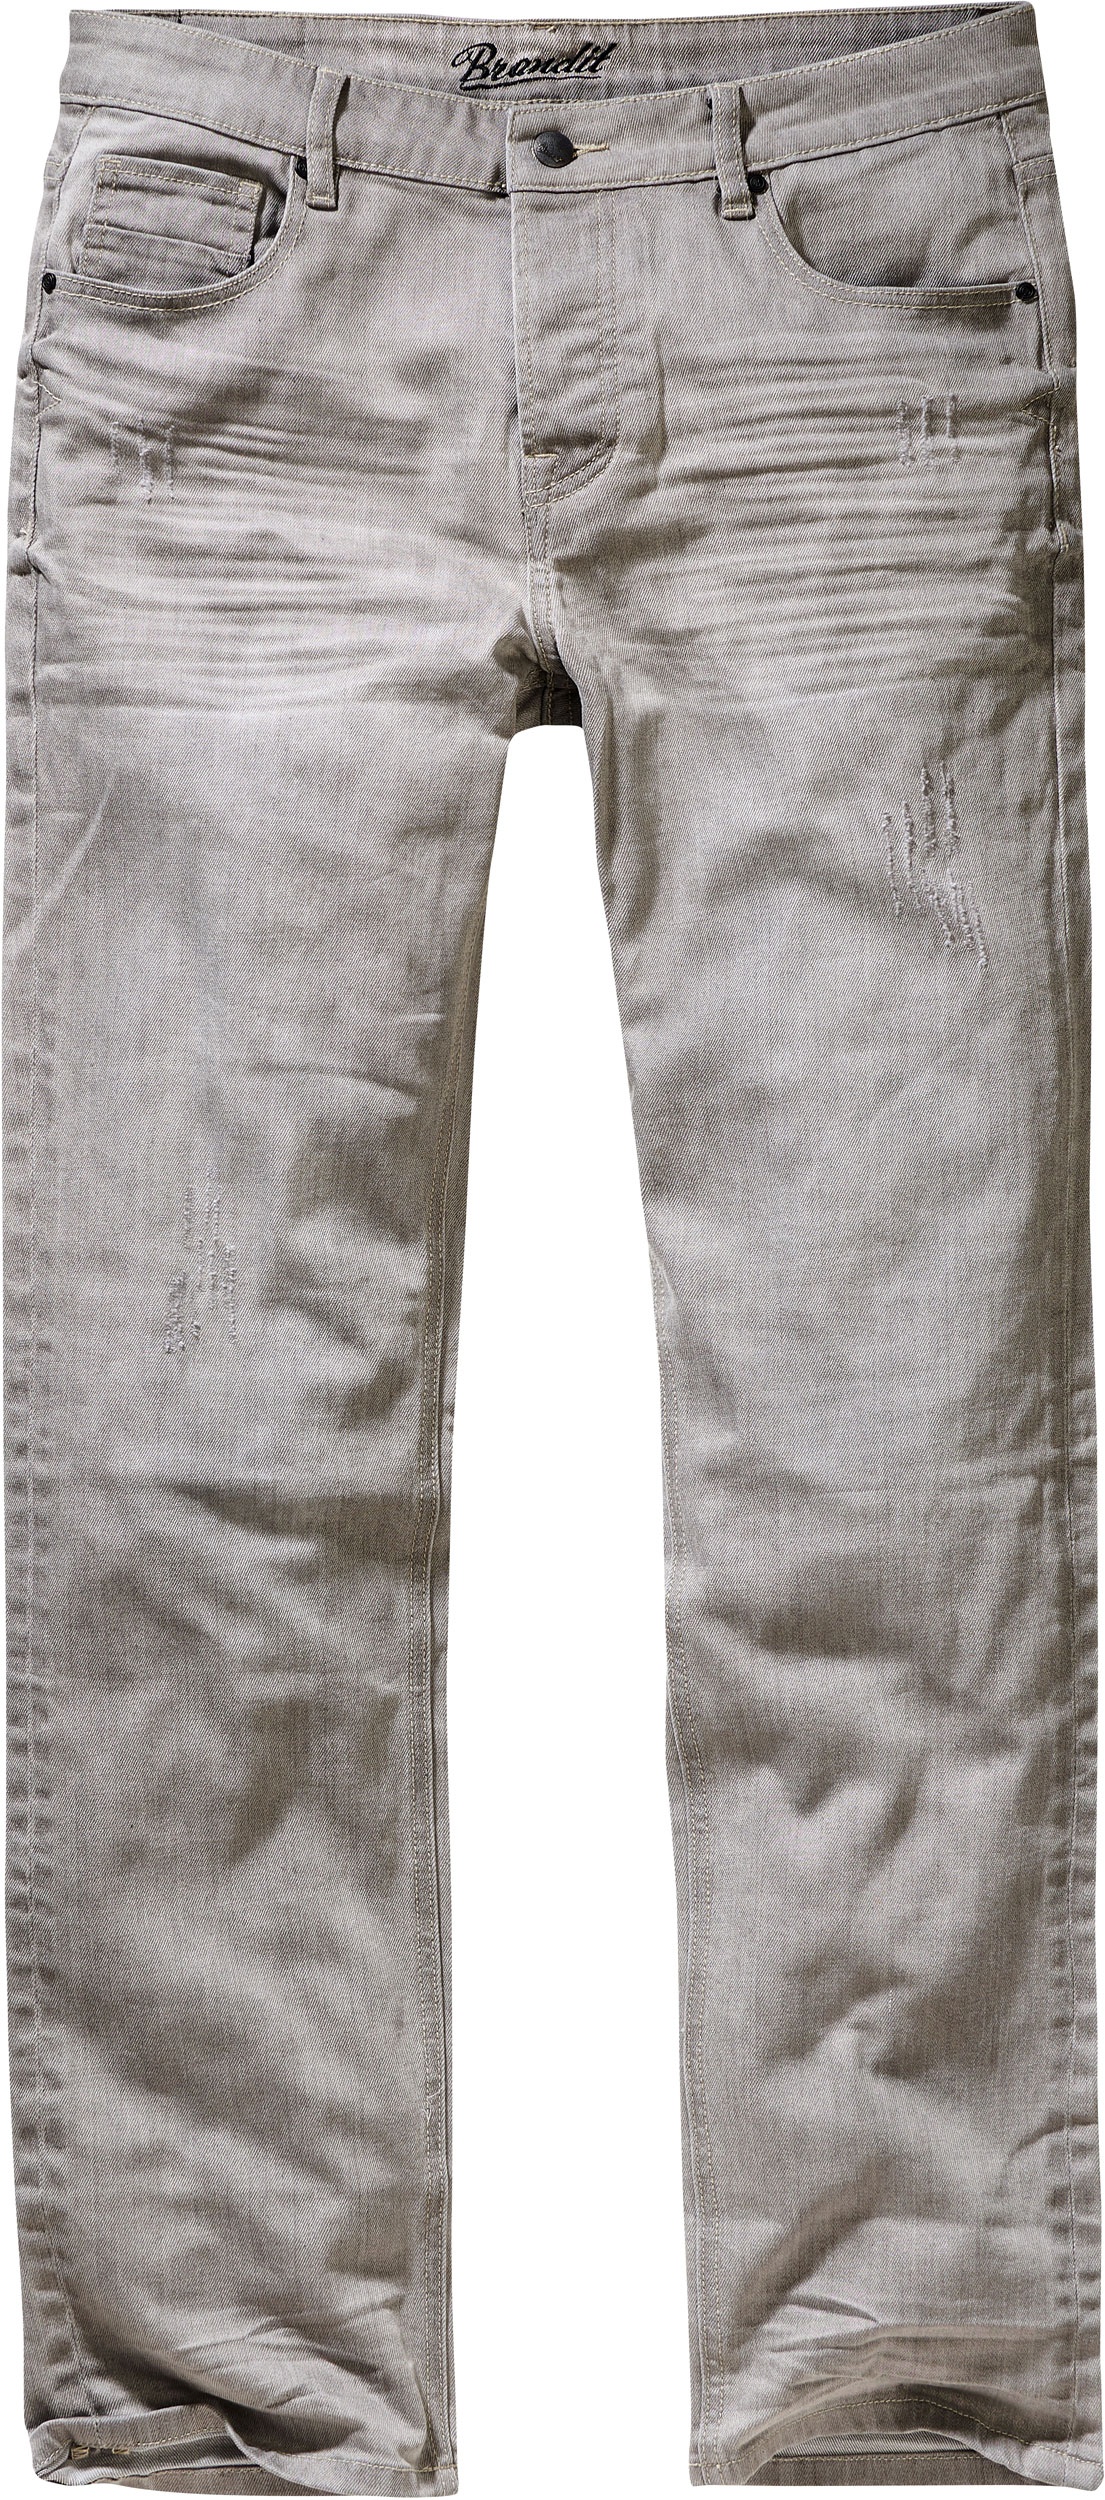 Brandit Jake Denim, Jeans - Gris - 33/34